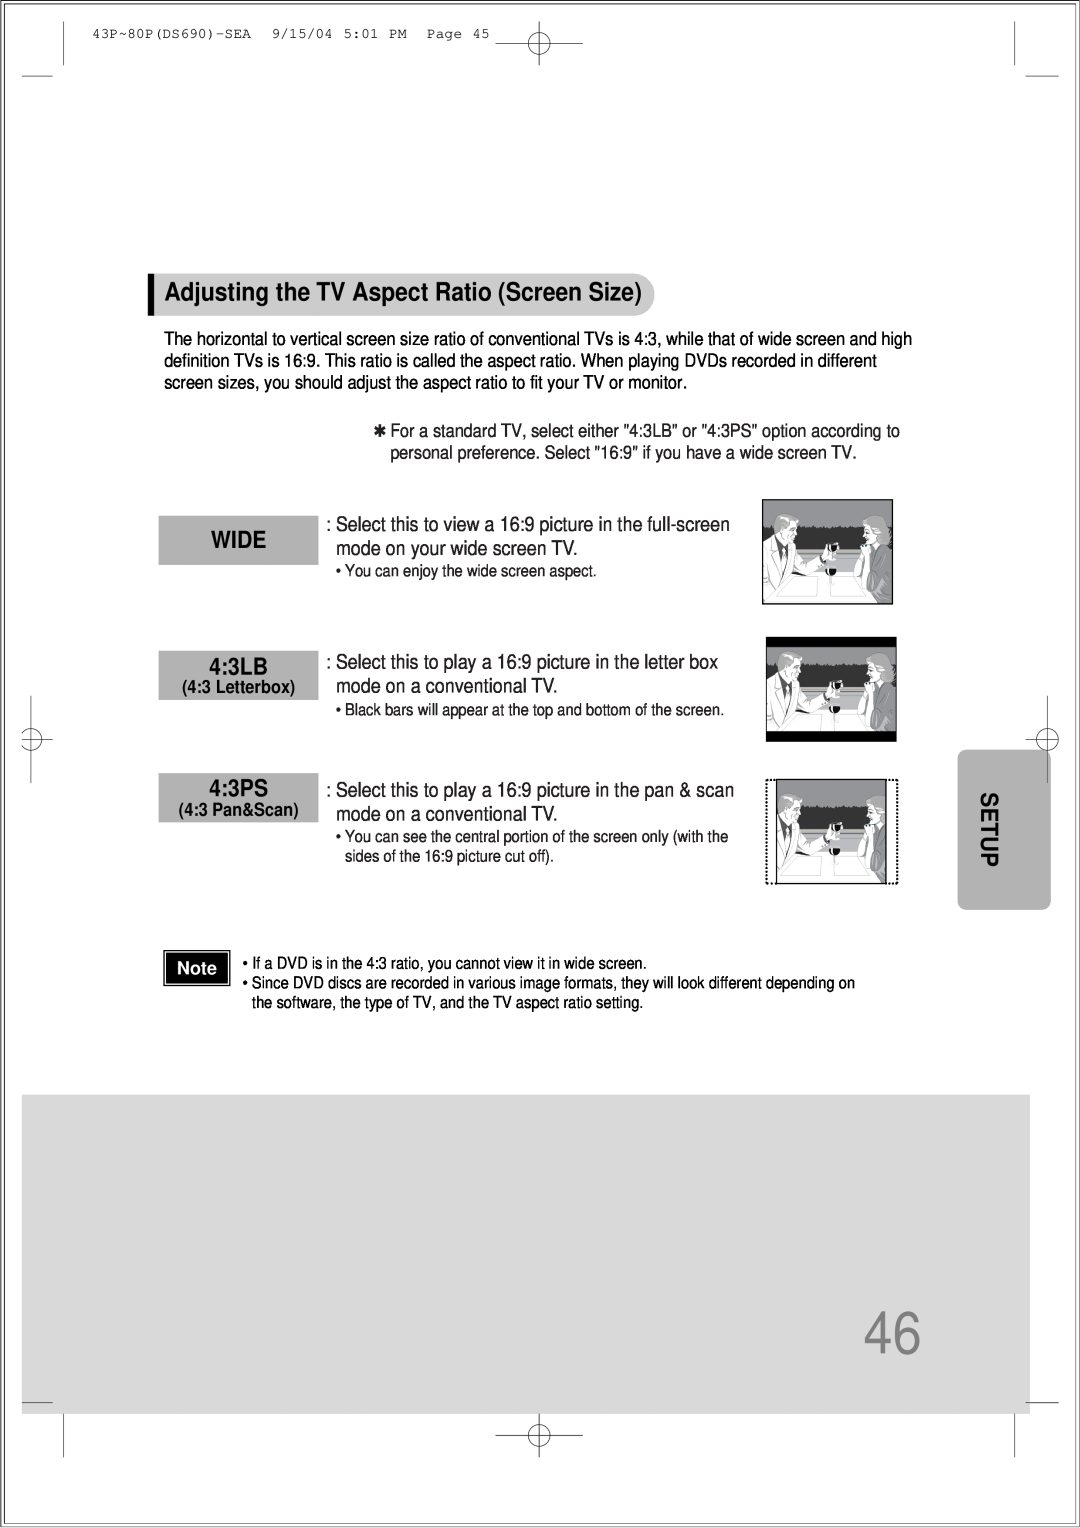 Samsung HT-DS690 instruction manual Adjusting the TV Aspect Ratio Screen Size, WIDE 4:3LB, 4:3PS, Setup 